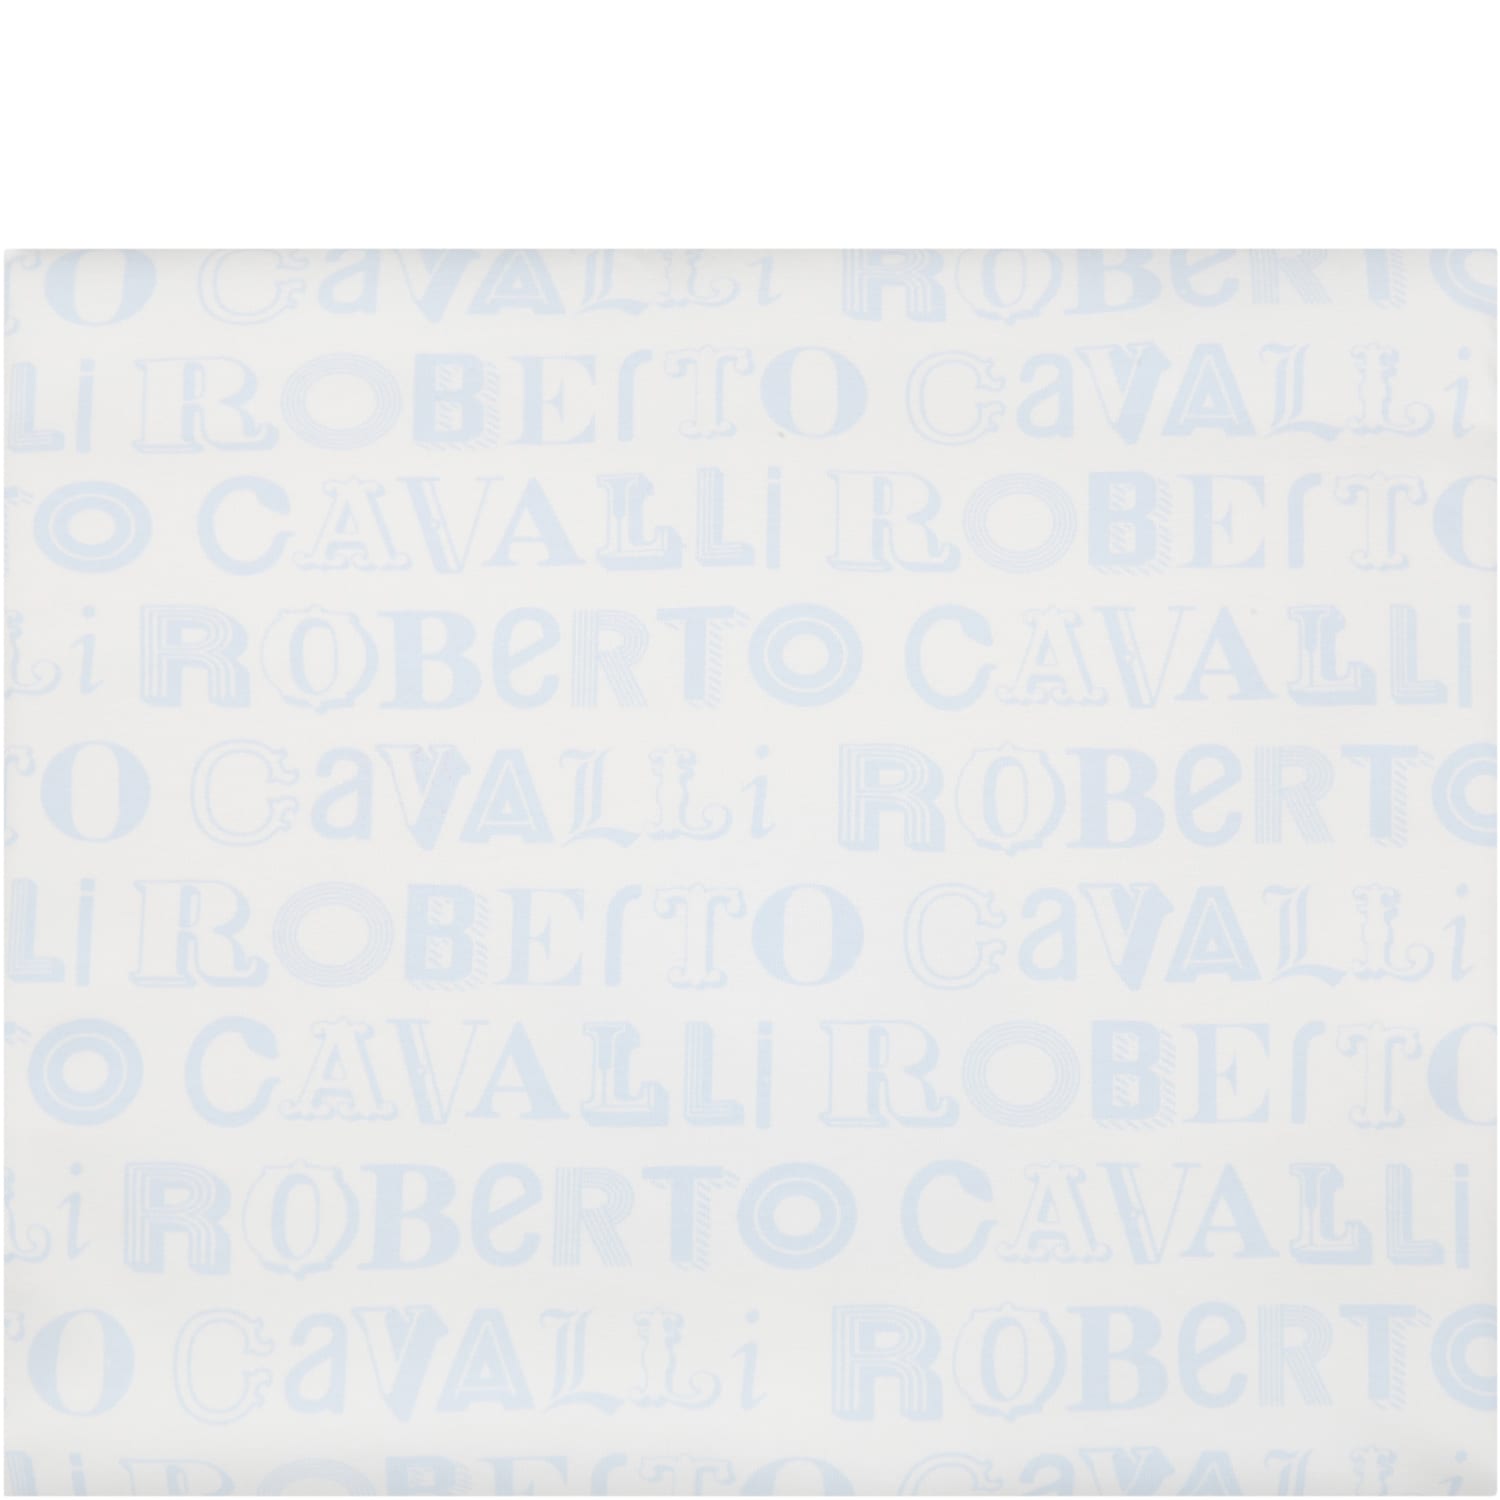 Roberto Cavalli White Blanket For Baby Boy With Logos